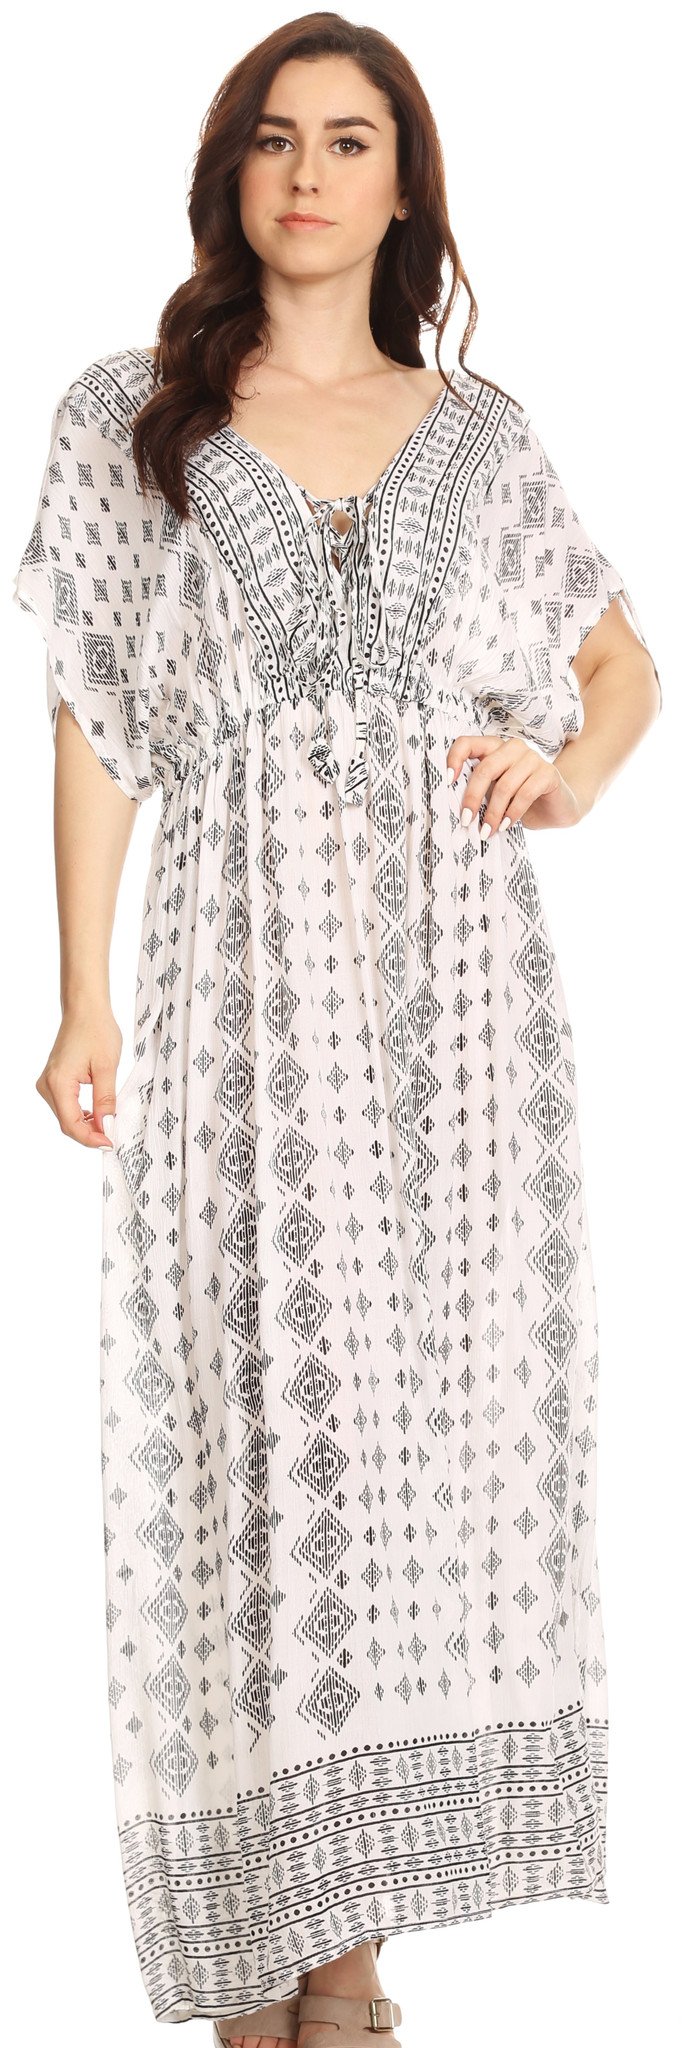 Sakkas Sofia Aztec Print V-neck Caftan Summer Long  Maxi Dress